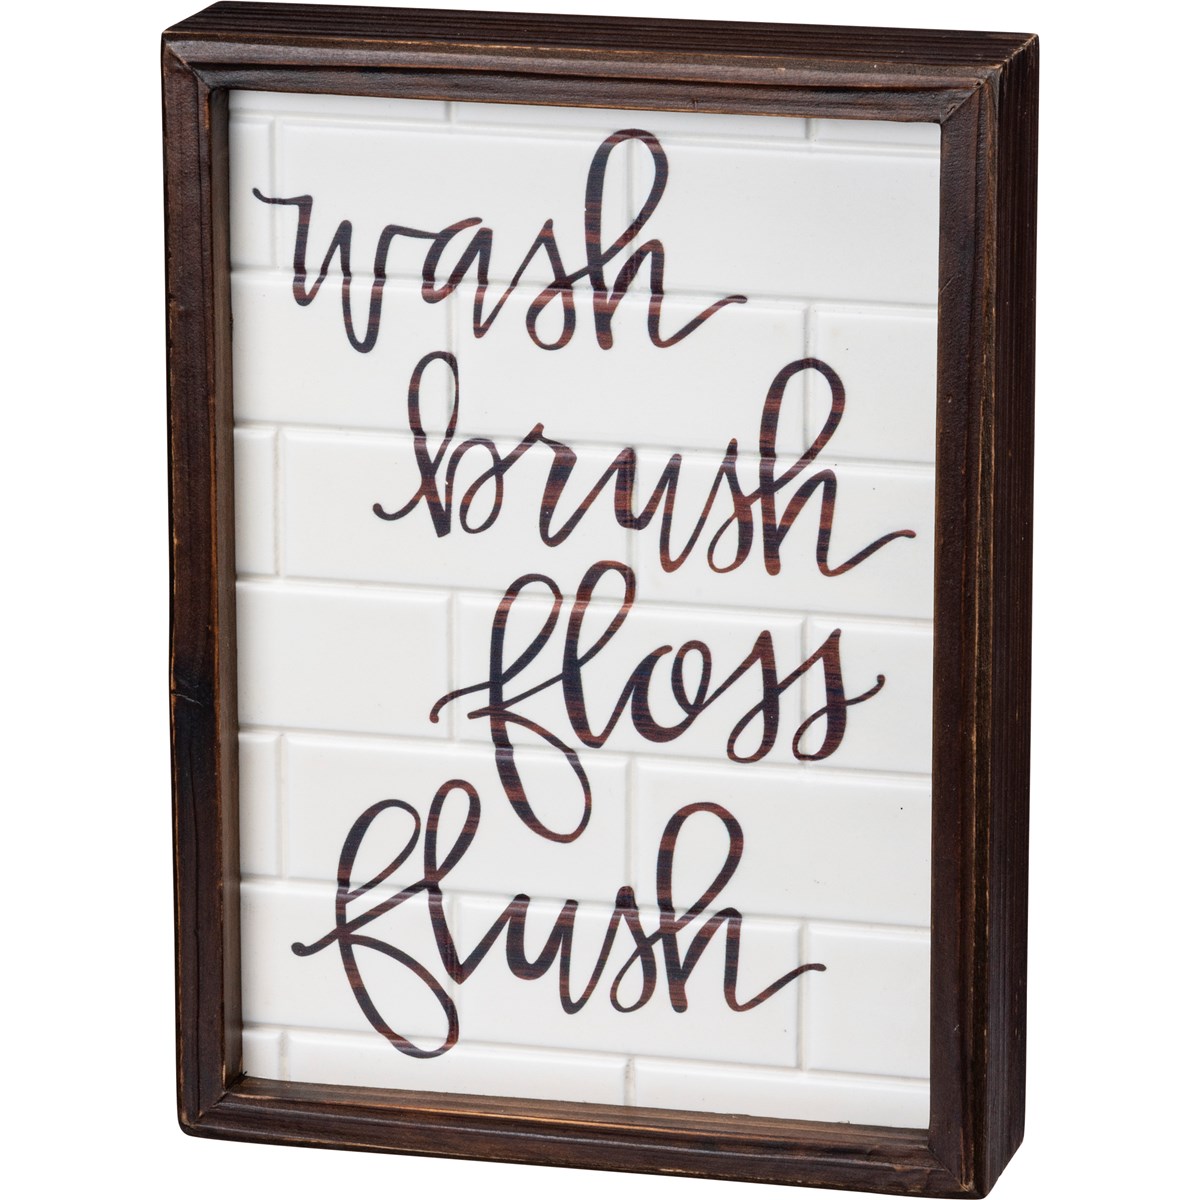 Inset Box Sign - Wash Brush Floss Flush - 7" x 9.50" x 1.75" - Wood